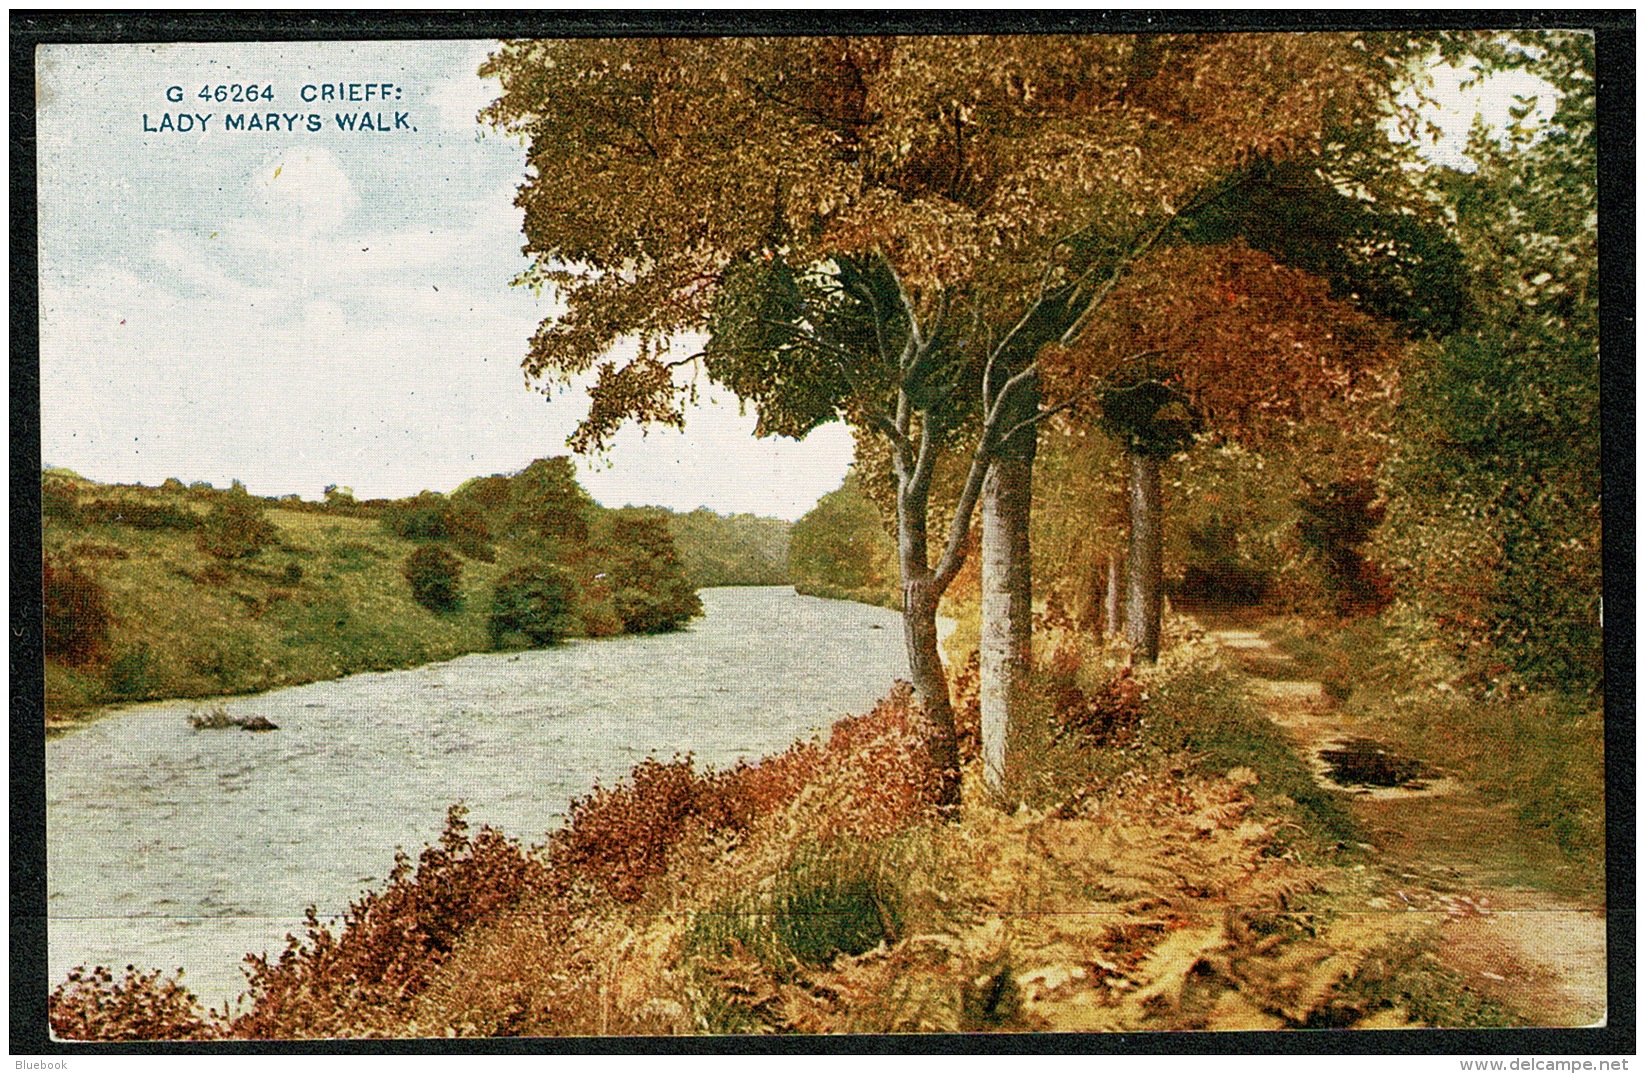 RB 1201 - Early Postcard - Lady Mary's Walk Crieff - Perthshire Scotland - Perthshire